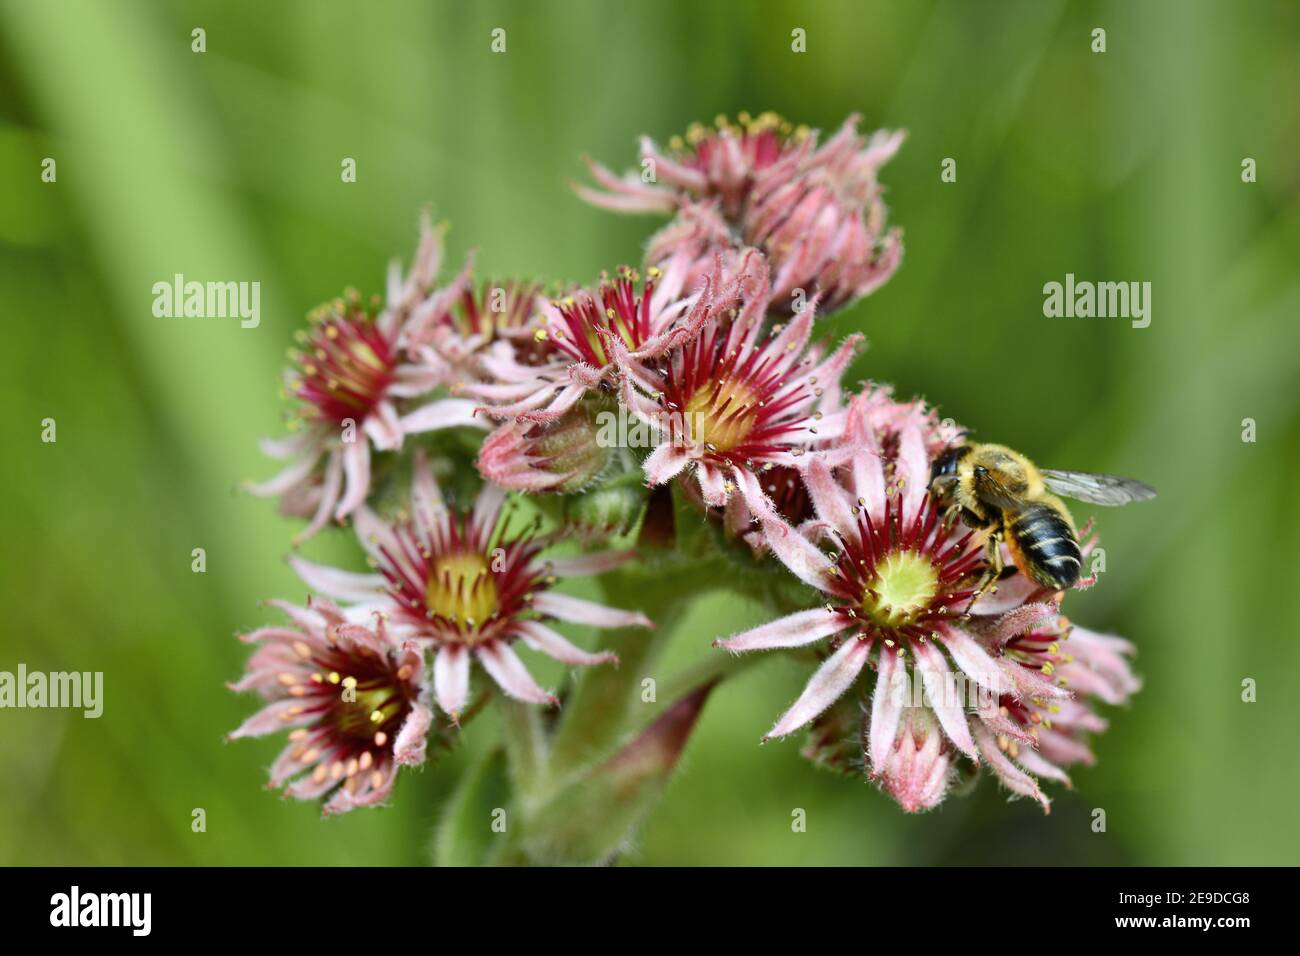 hen-and-chickens, house-leek, houseleek, common houseleek (Sempervivum tectorum), flowers with honey bee, Germany Stock Photo